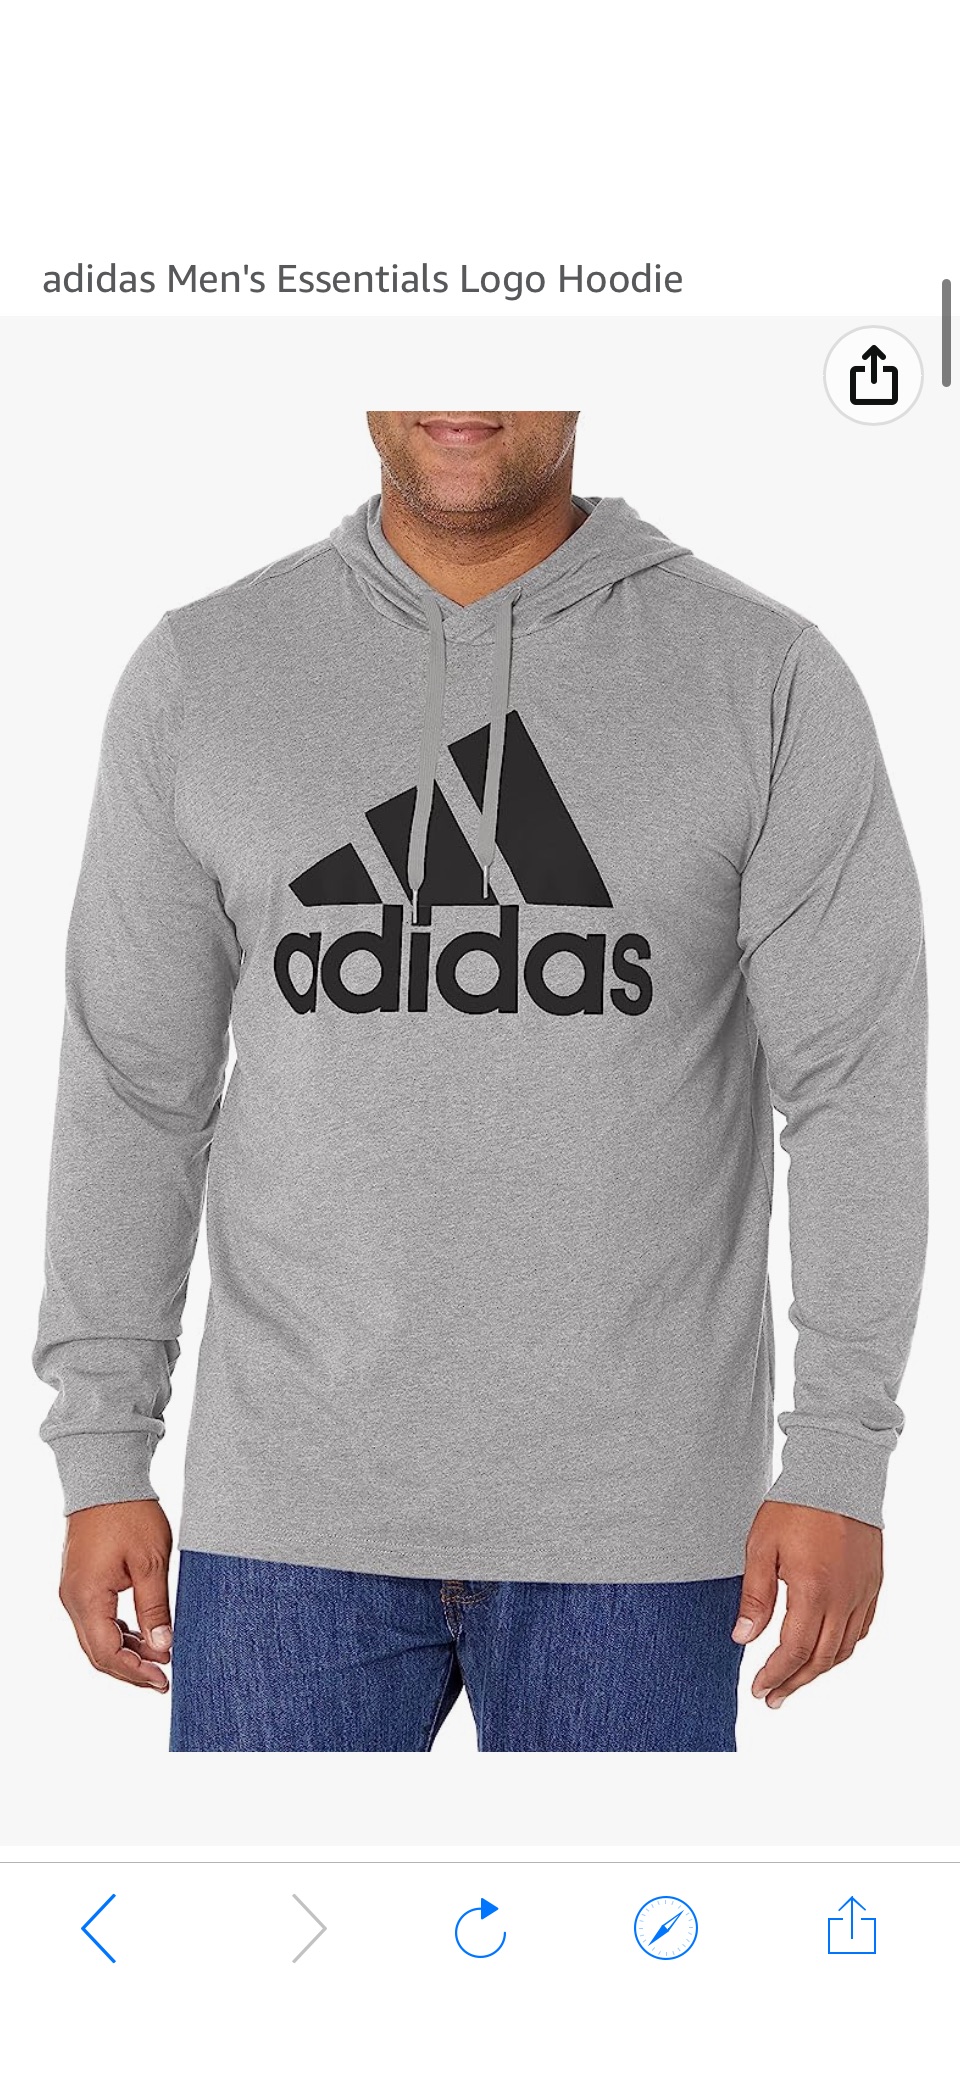 adidas Men's Essentials Logo Hoodie, Medium Grey Heather/Black at Amazon Men’s Clothing store原价40